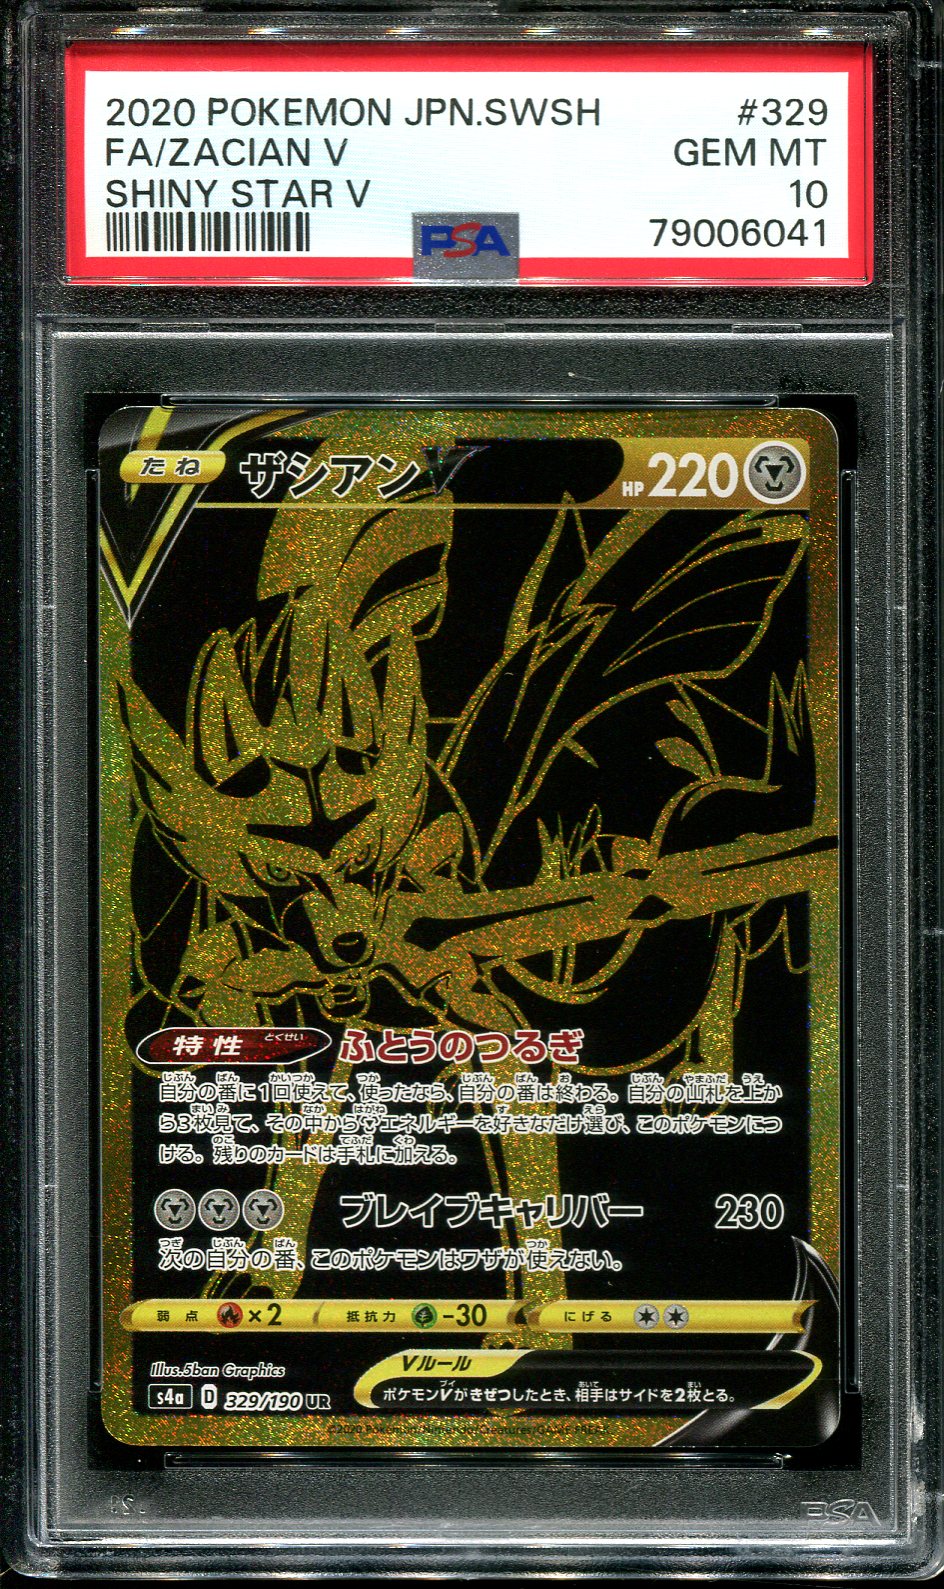 Full Art Zacian V Gold Pokemon Japanese Shiny Star V PSA 10 #329